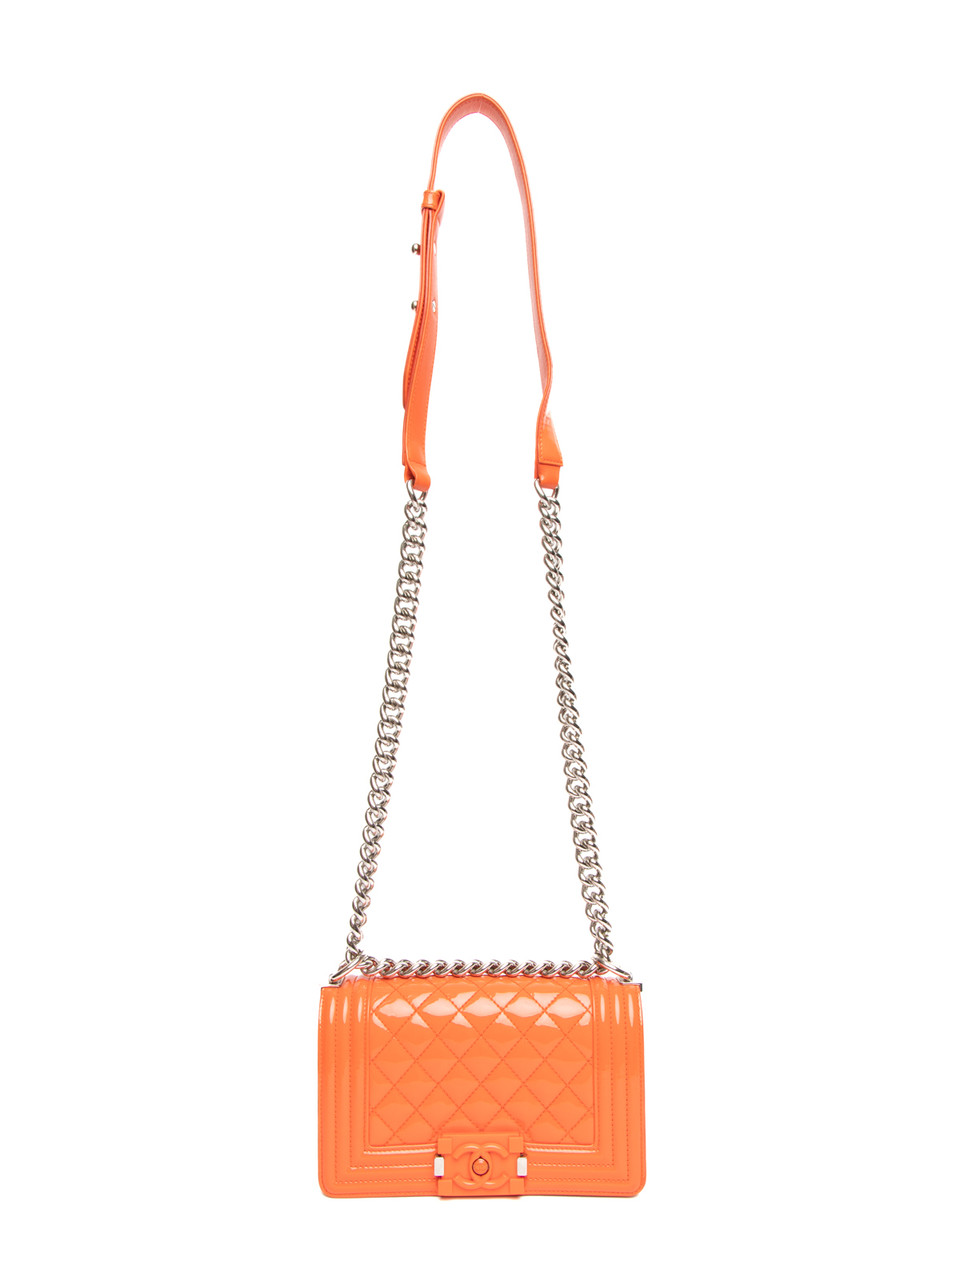 Chanel Small Plexiglass Boy Bag in Patent Leather Orange